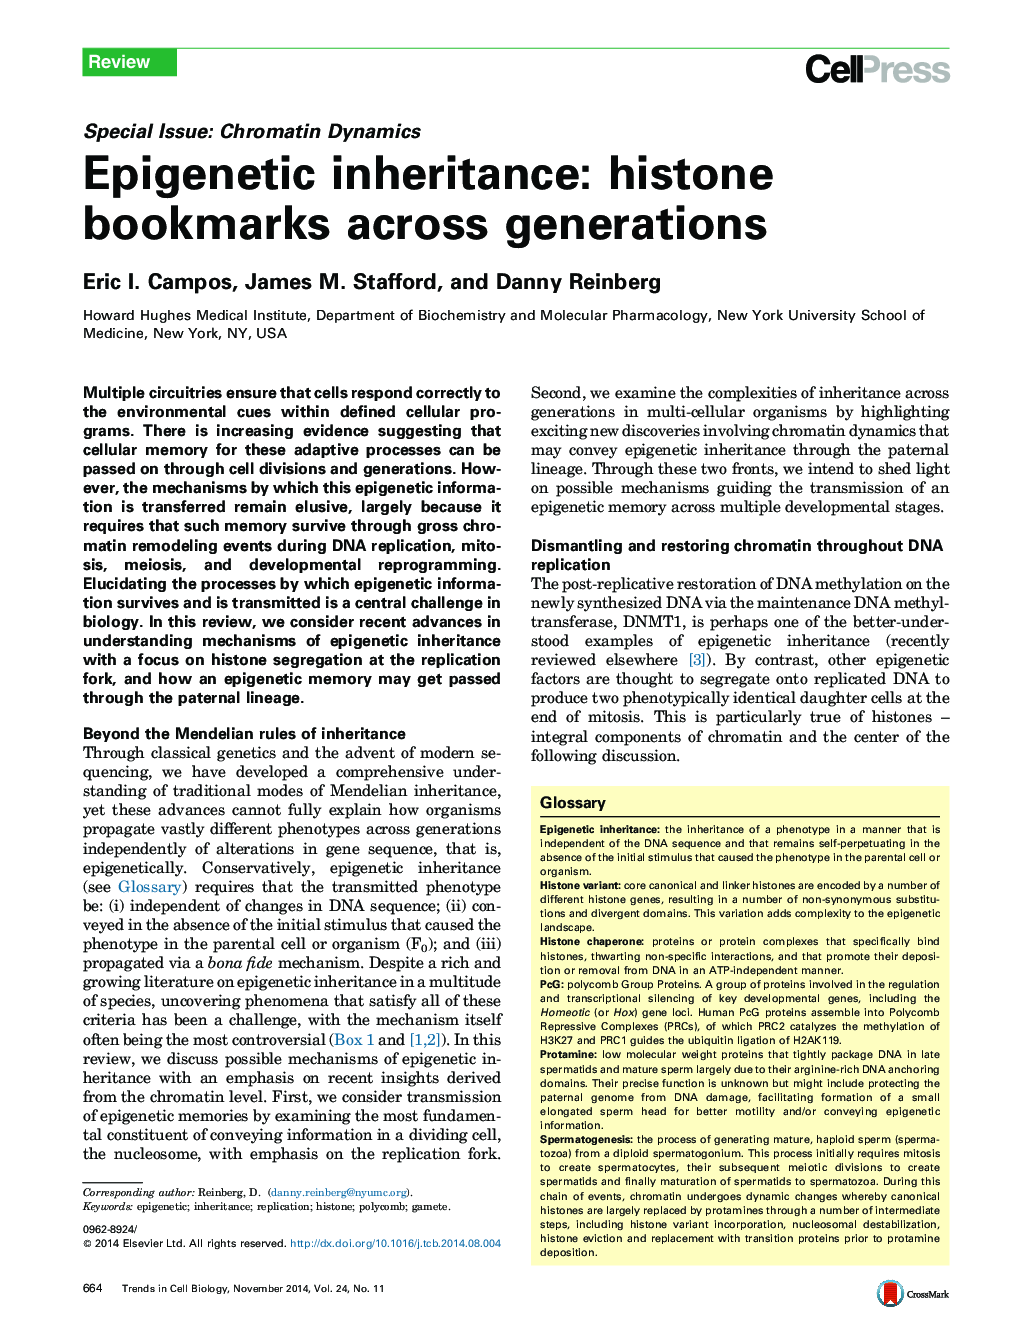 Epigenetic inheritance: histone bookmarks across generations